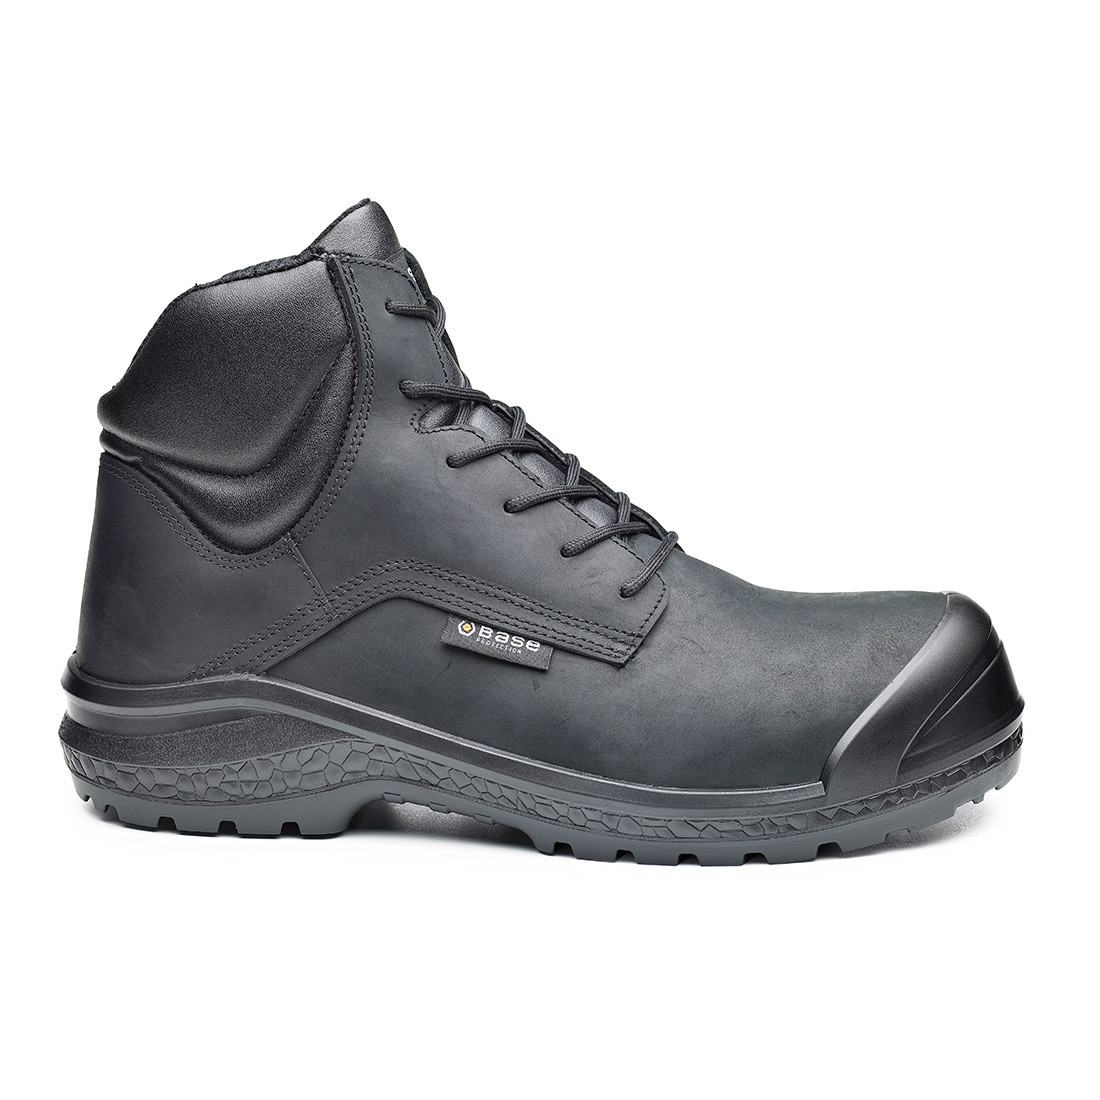 Be-Browny Top S3 CI SRC - Les chaussures de protection